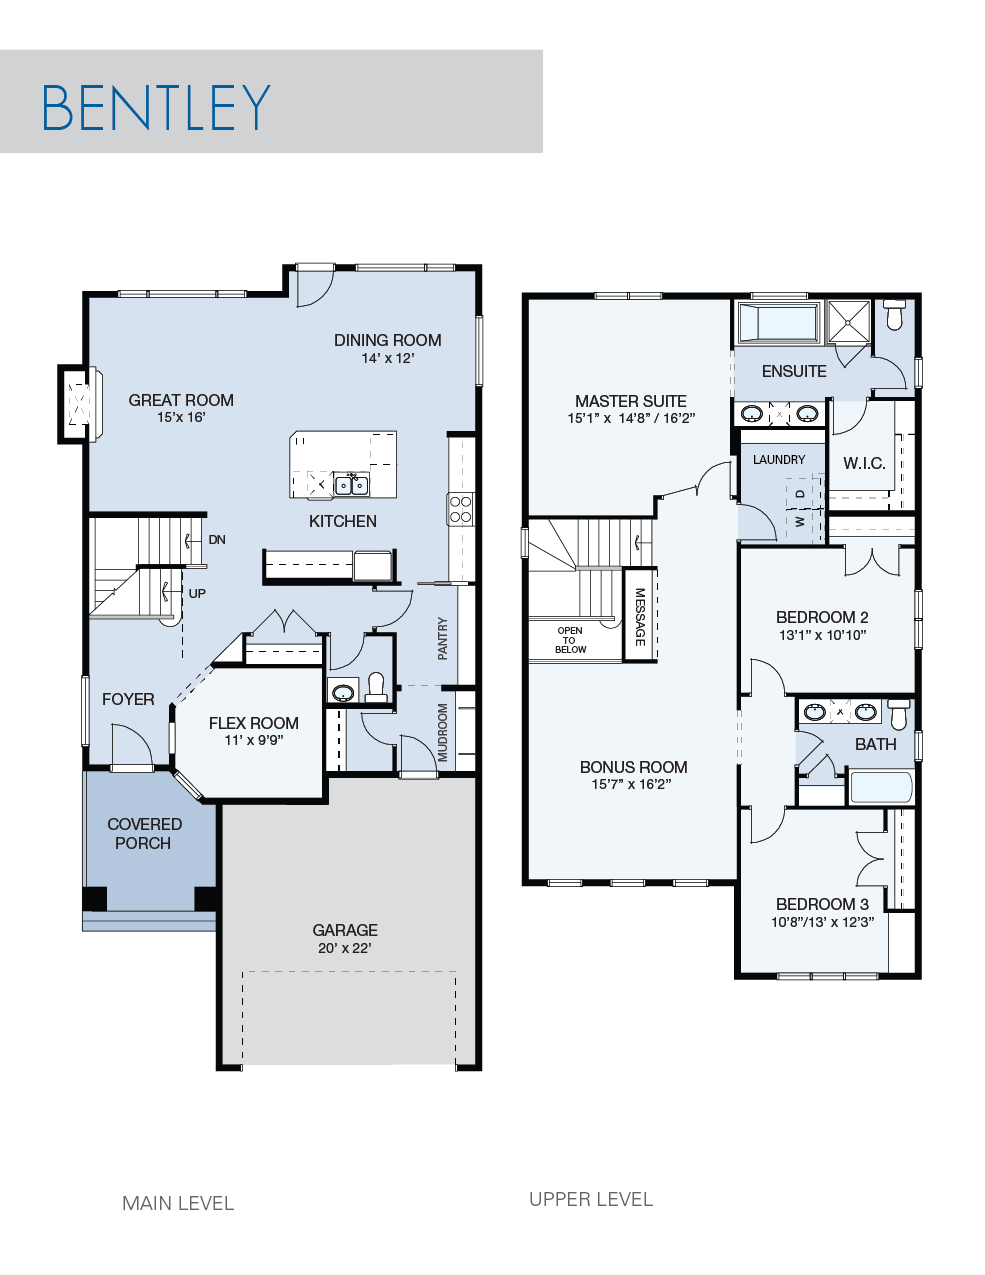 Bentley floor plan by NuVista Homes